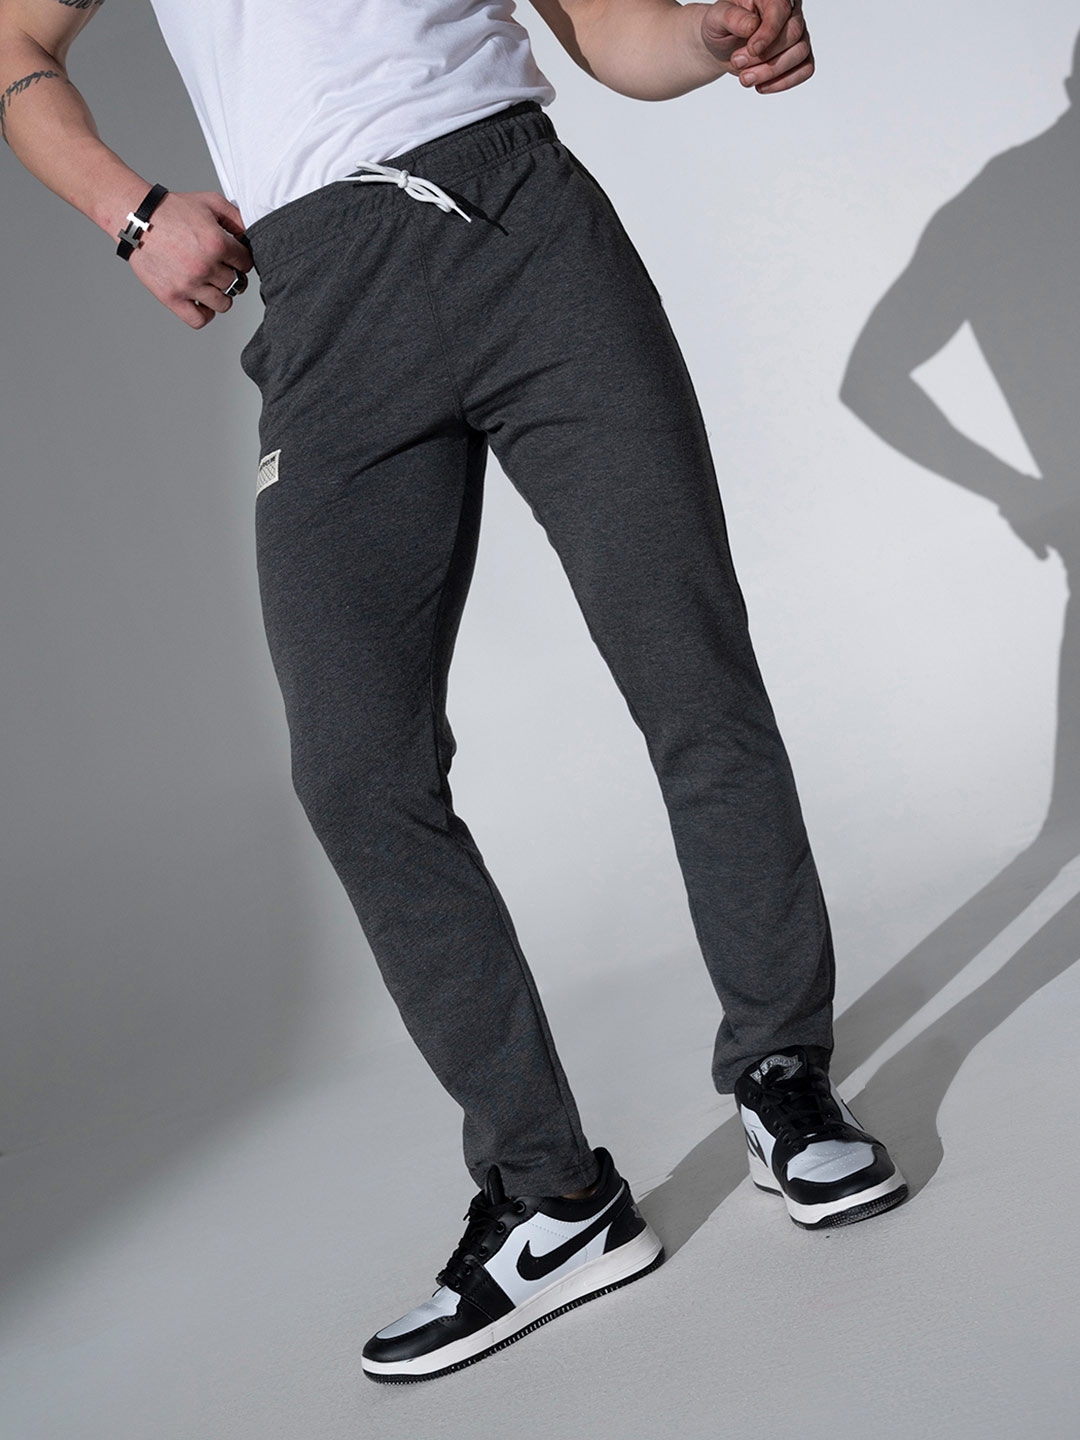 RBX Gray Active Pants Size M - 67% off